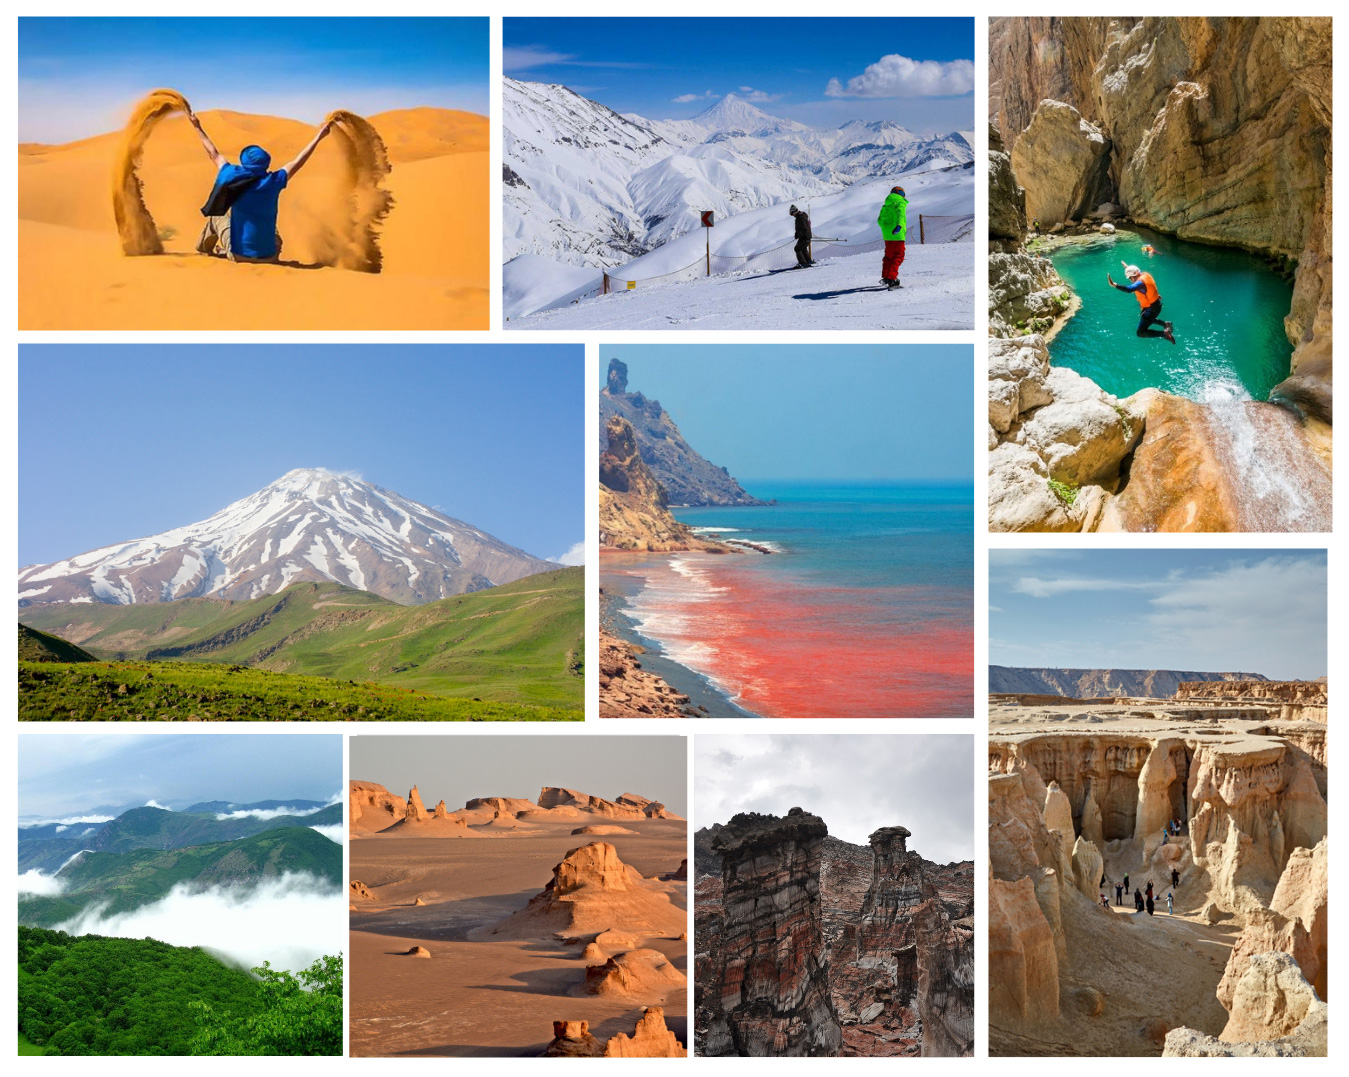 Irans Nature - Iran Adventure Tours: Trekking, Rock Climbing, Skiing, Hiking & Canyoneering